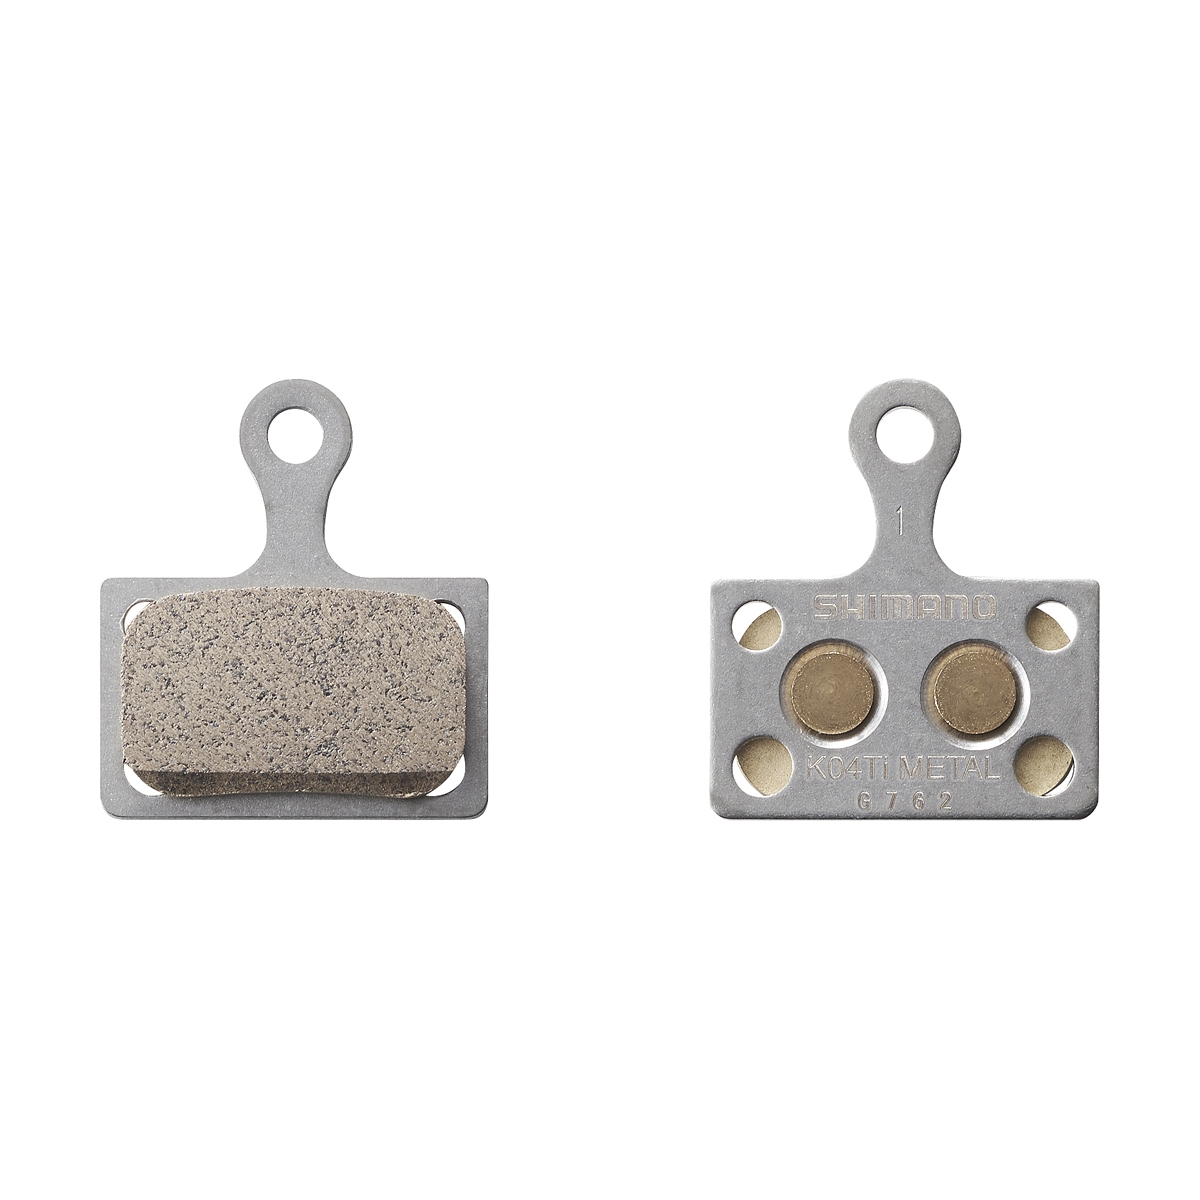 Pair of K04TI metal disc brake pads for XTR BR-M9100 - 2019